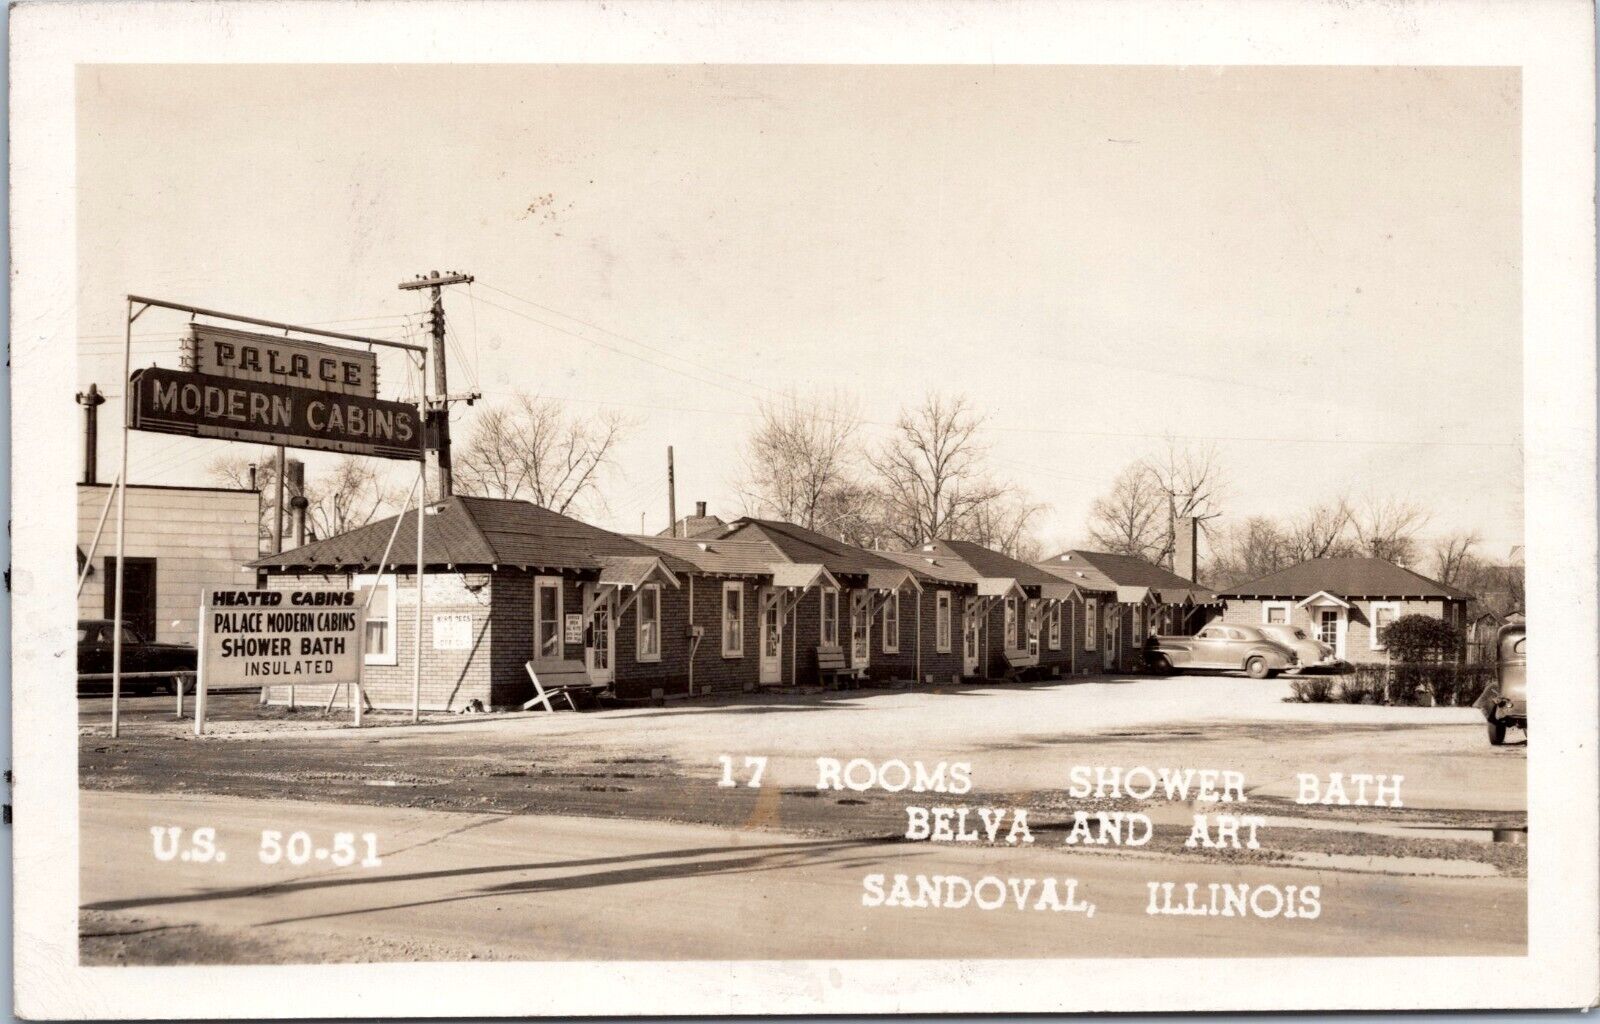 RPPC Palace Modern Cabins, Sandoval, Illinois - c1940s Photo Postcard - Motel